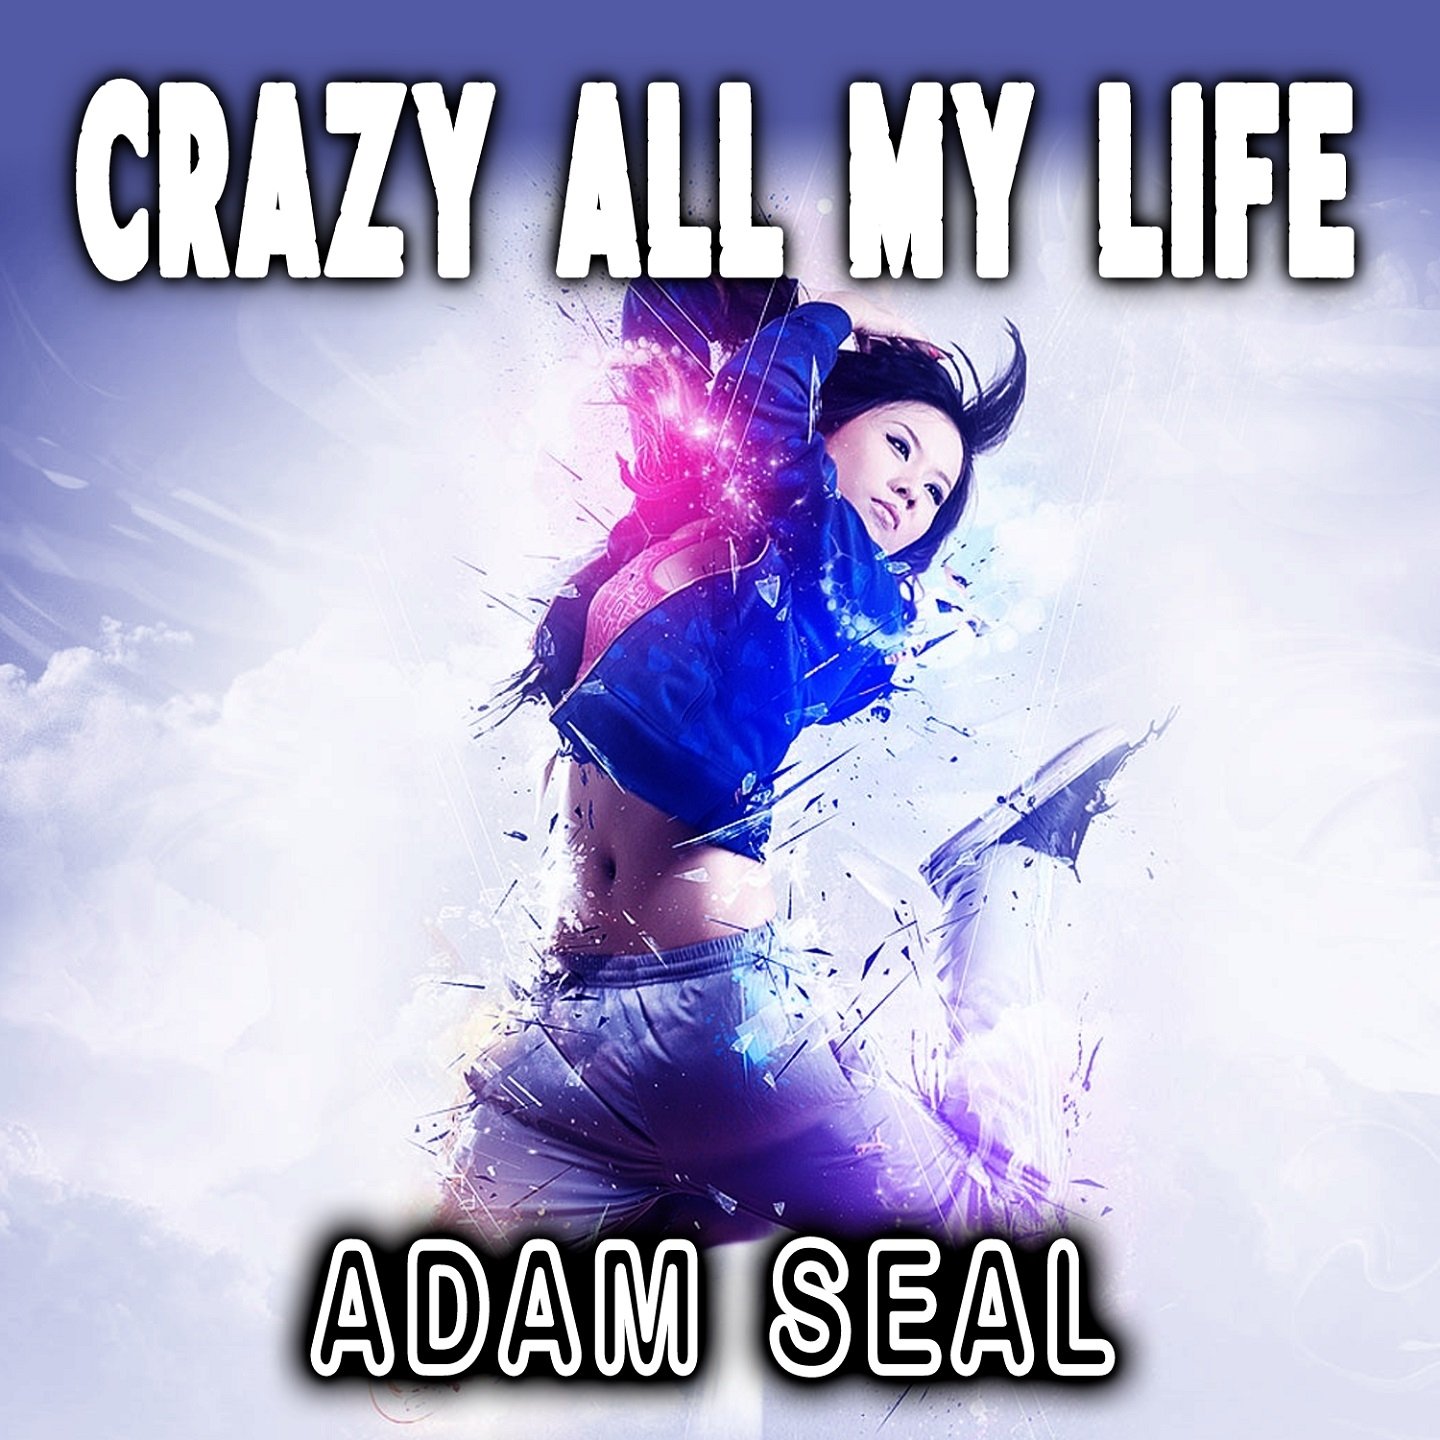 Песня крейзи май лайф. Crazy all my Life. Daniel Powter - Crazy all my Life. Crazy on my Life. All my Life песня.